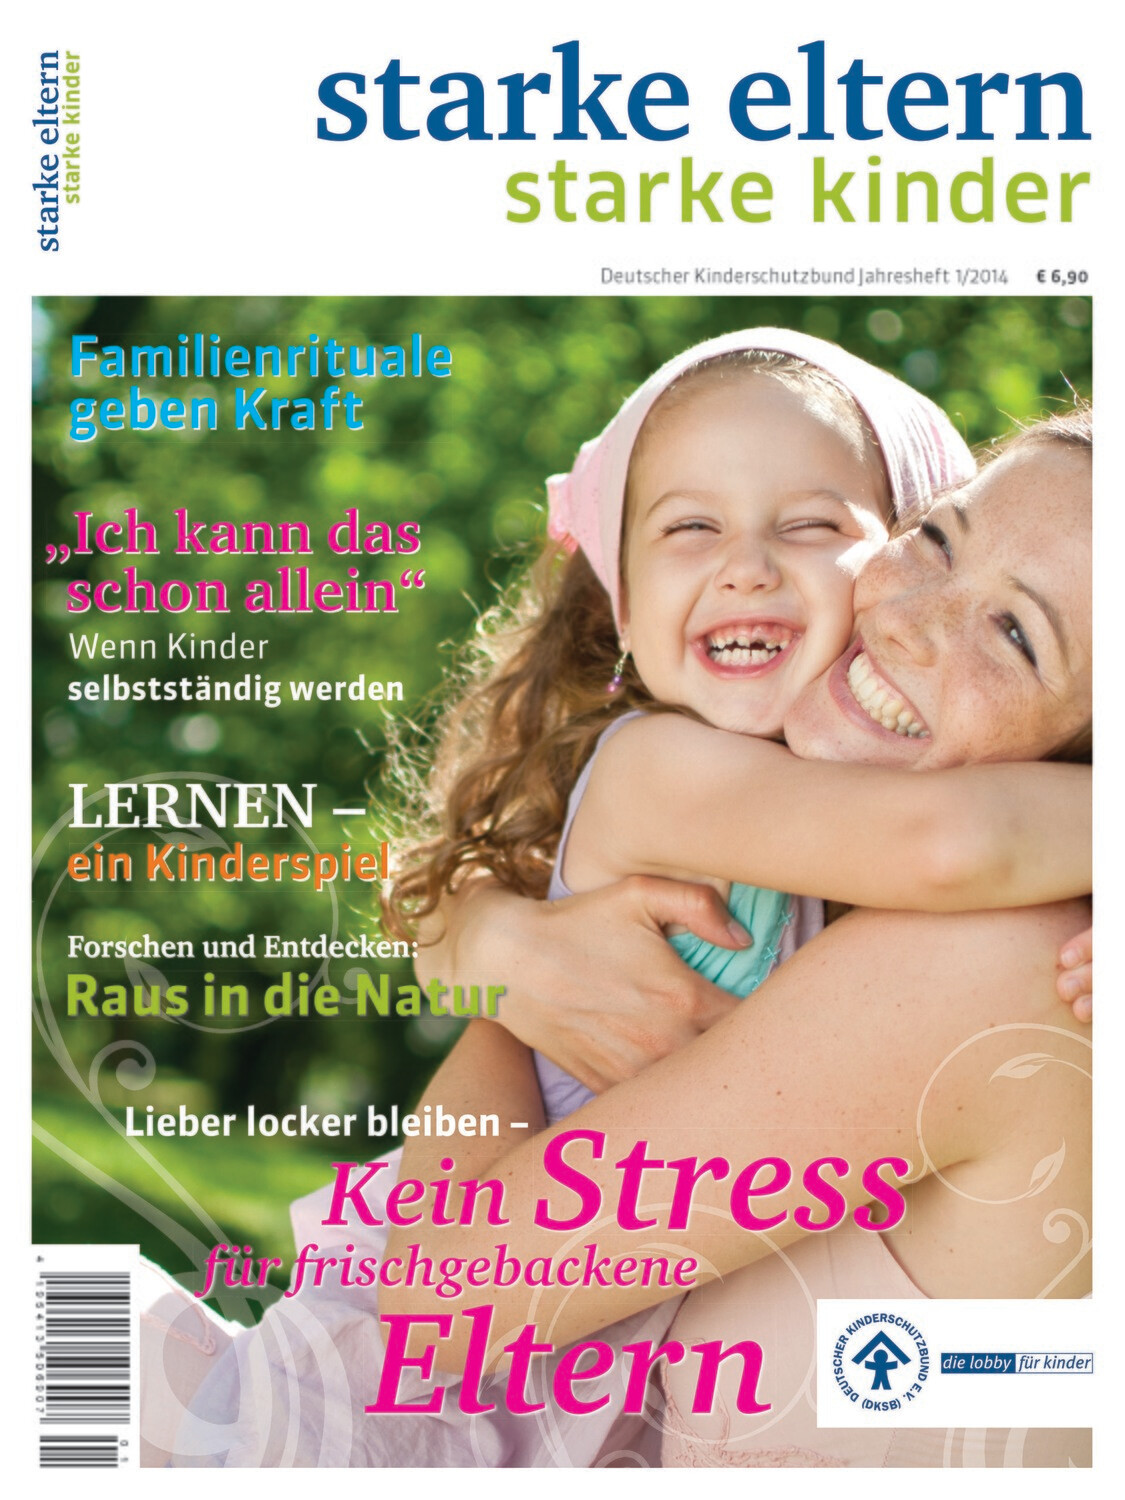 starke eltern - starke kinder 2014 (e-paper)